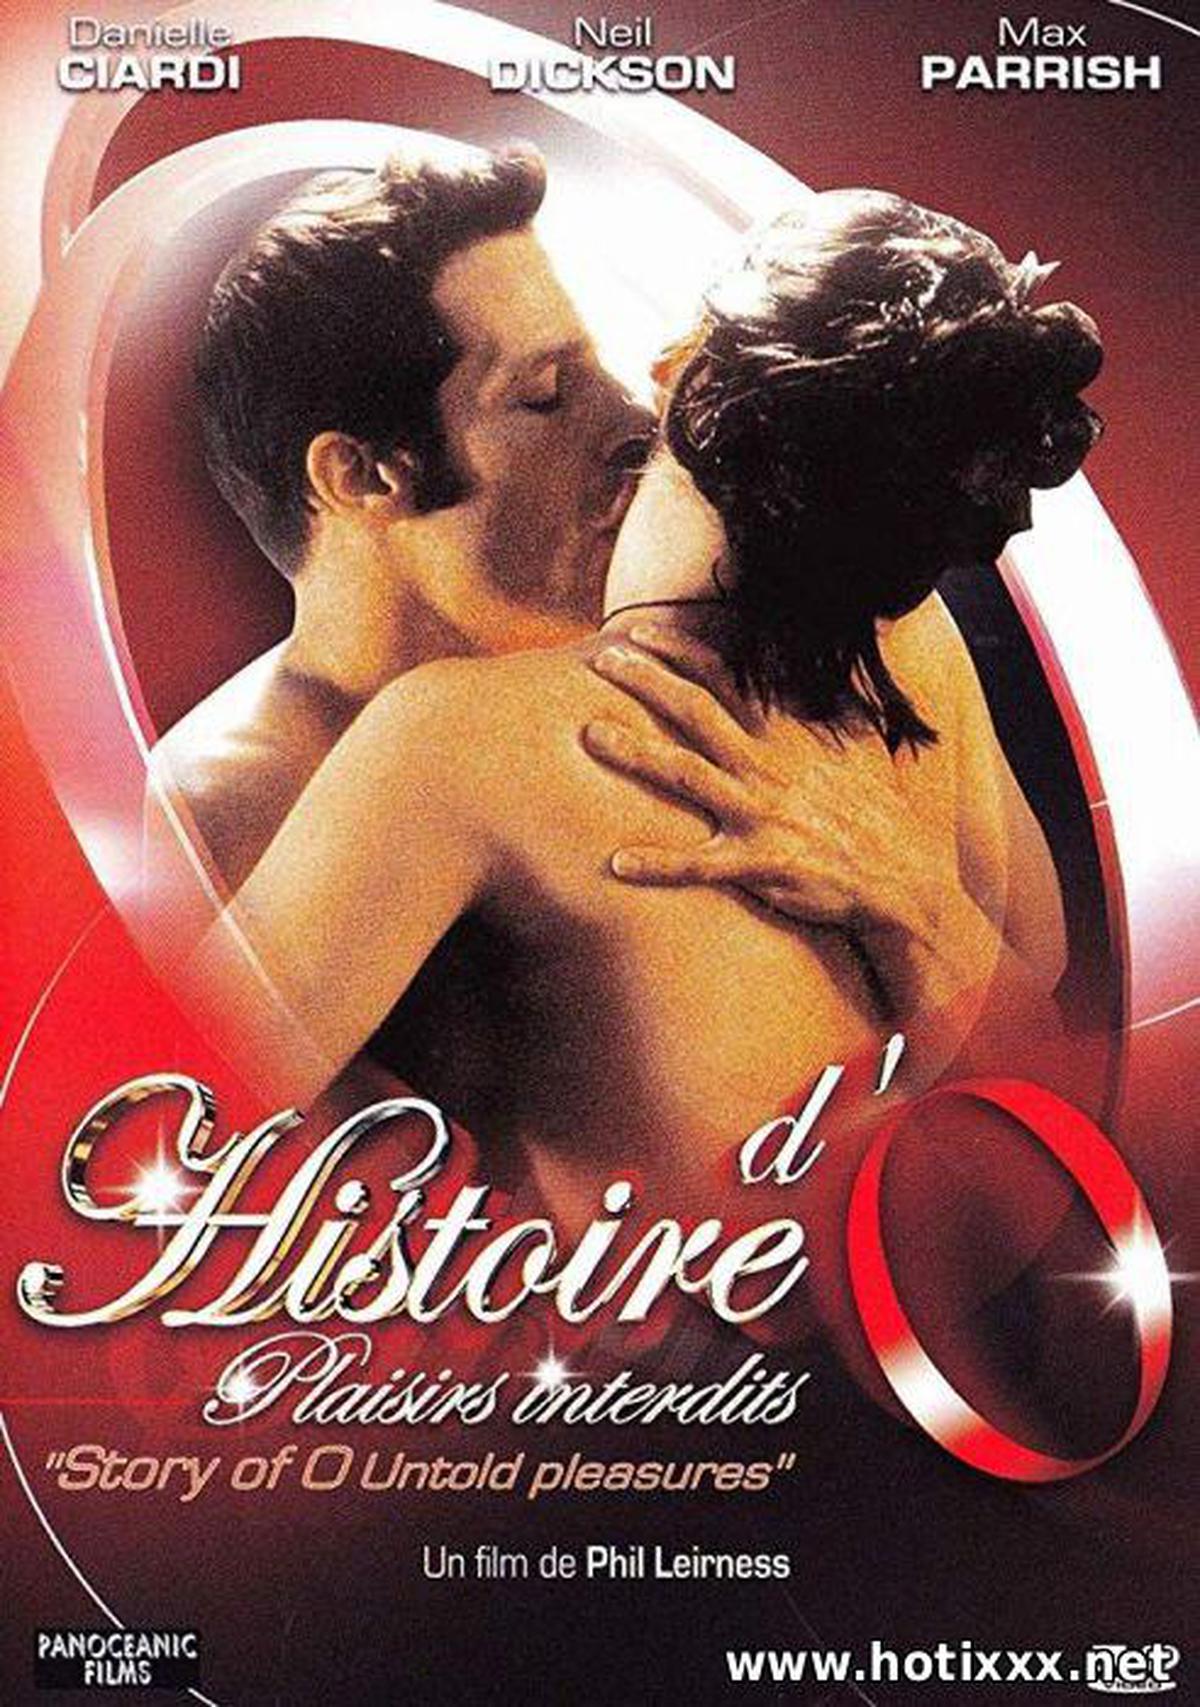 The Story of O : Untold Pleasures / Histoire d’O : Plaisirs interdits / Geschichte der O : Untold Pleasures (2002)